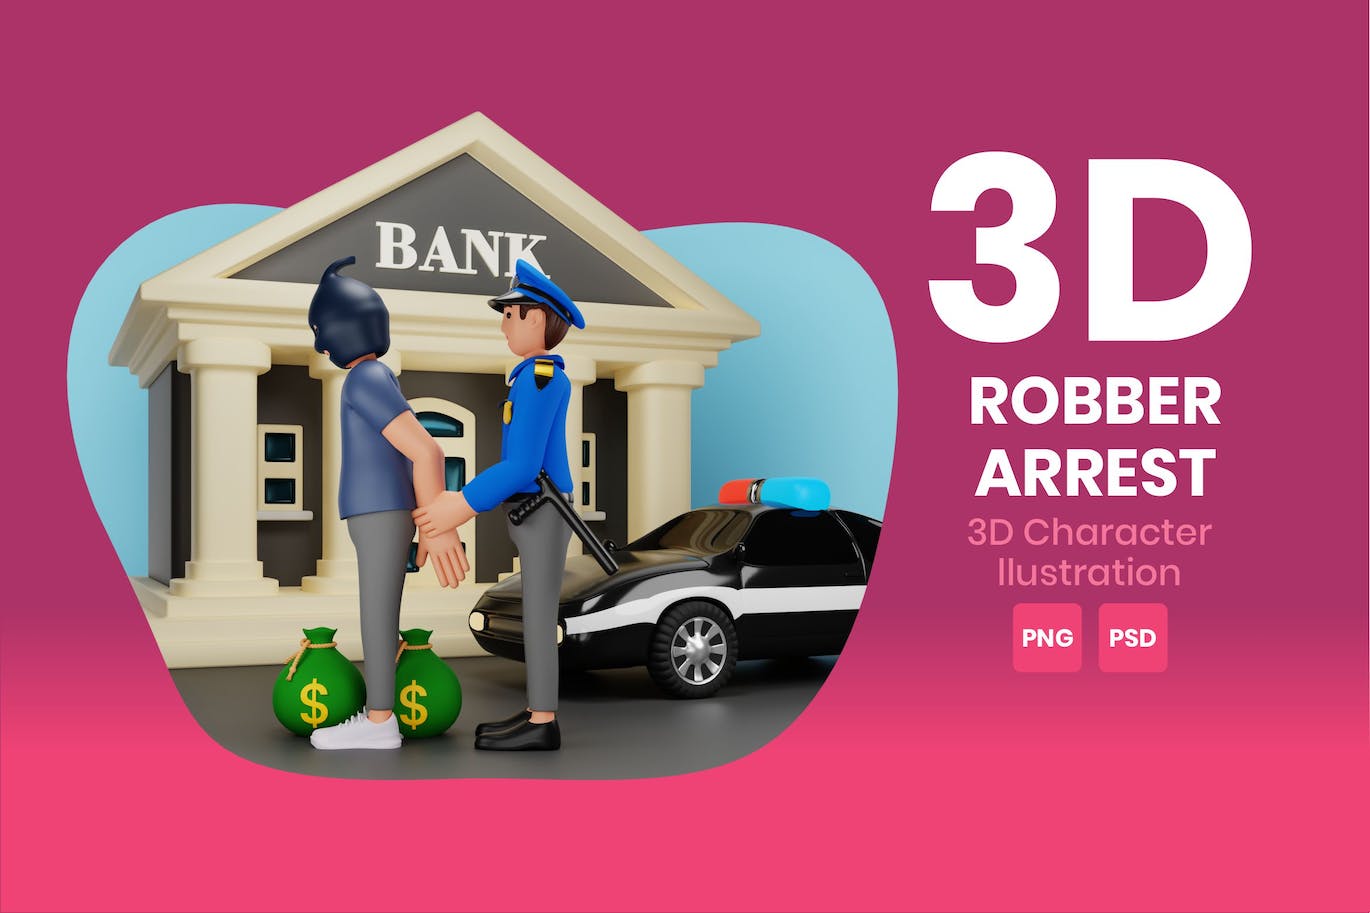 抢劫被捕场景3D角色插画素材 Robber Arrest 3D Character Illustration 图片素材 第1张